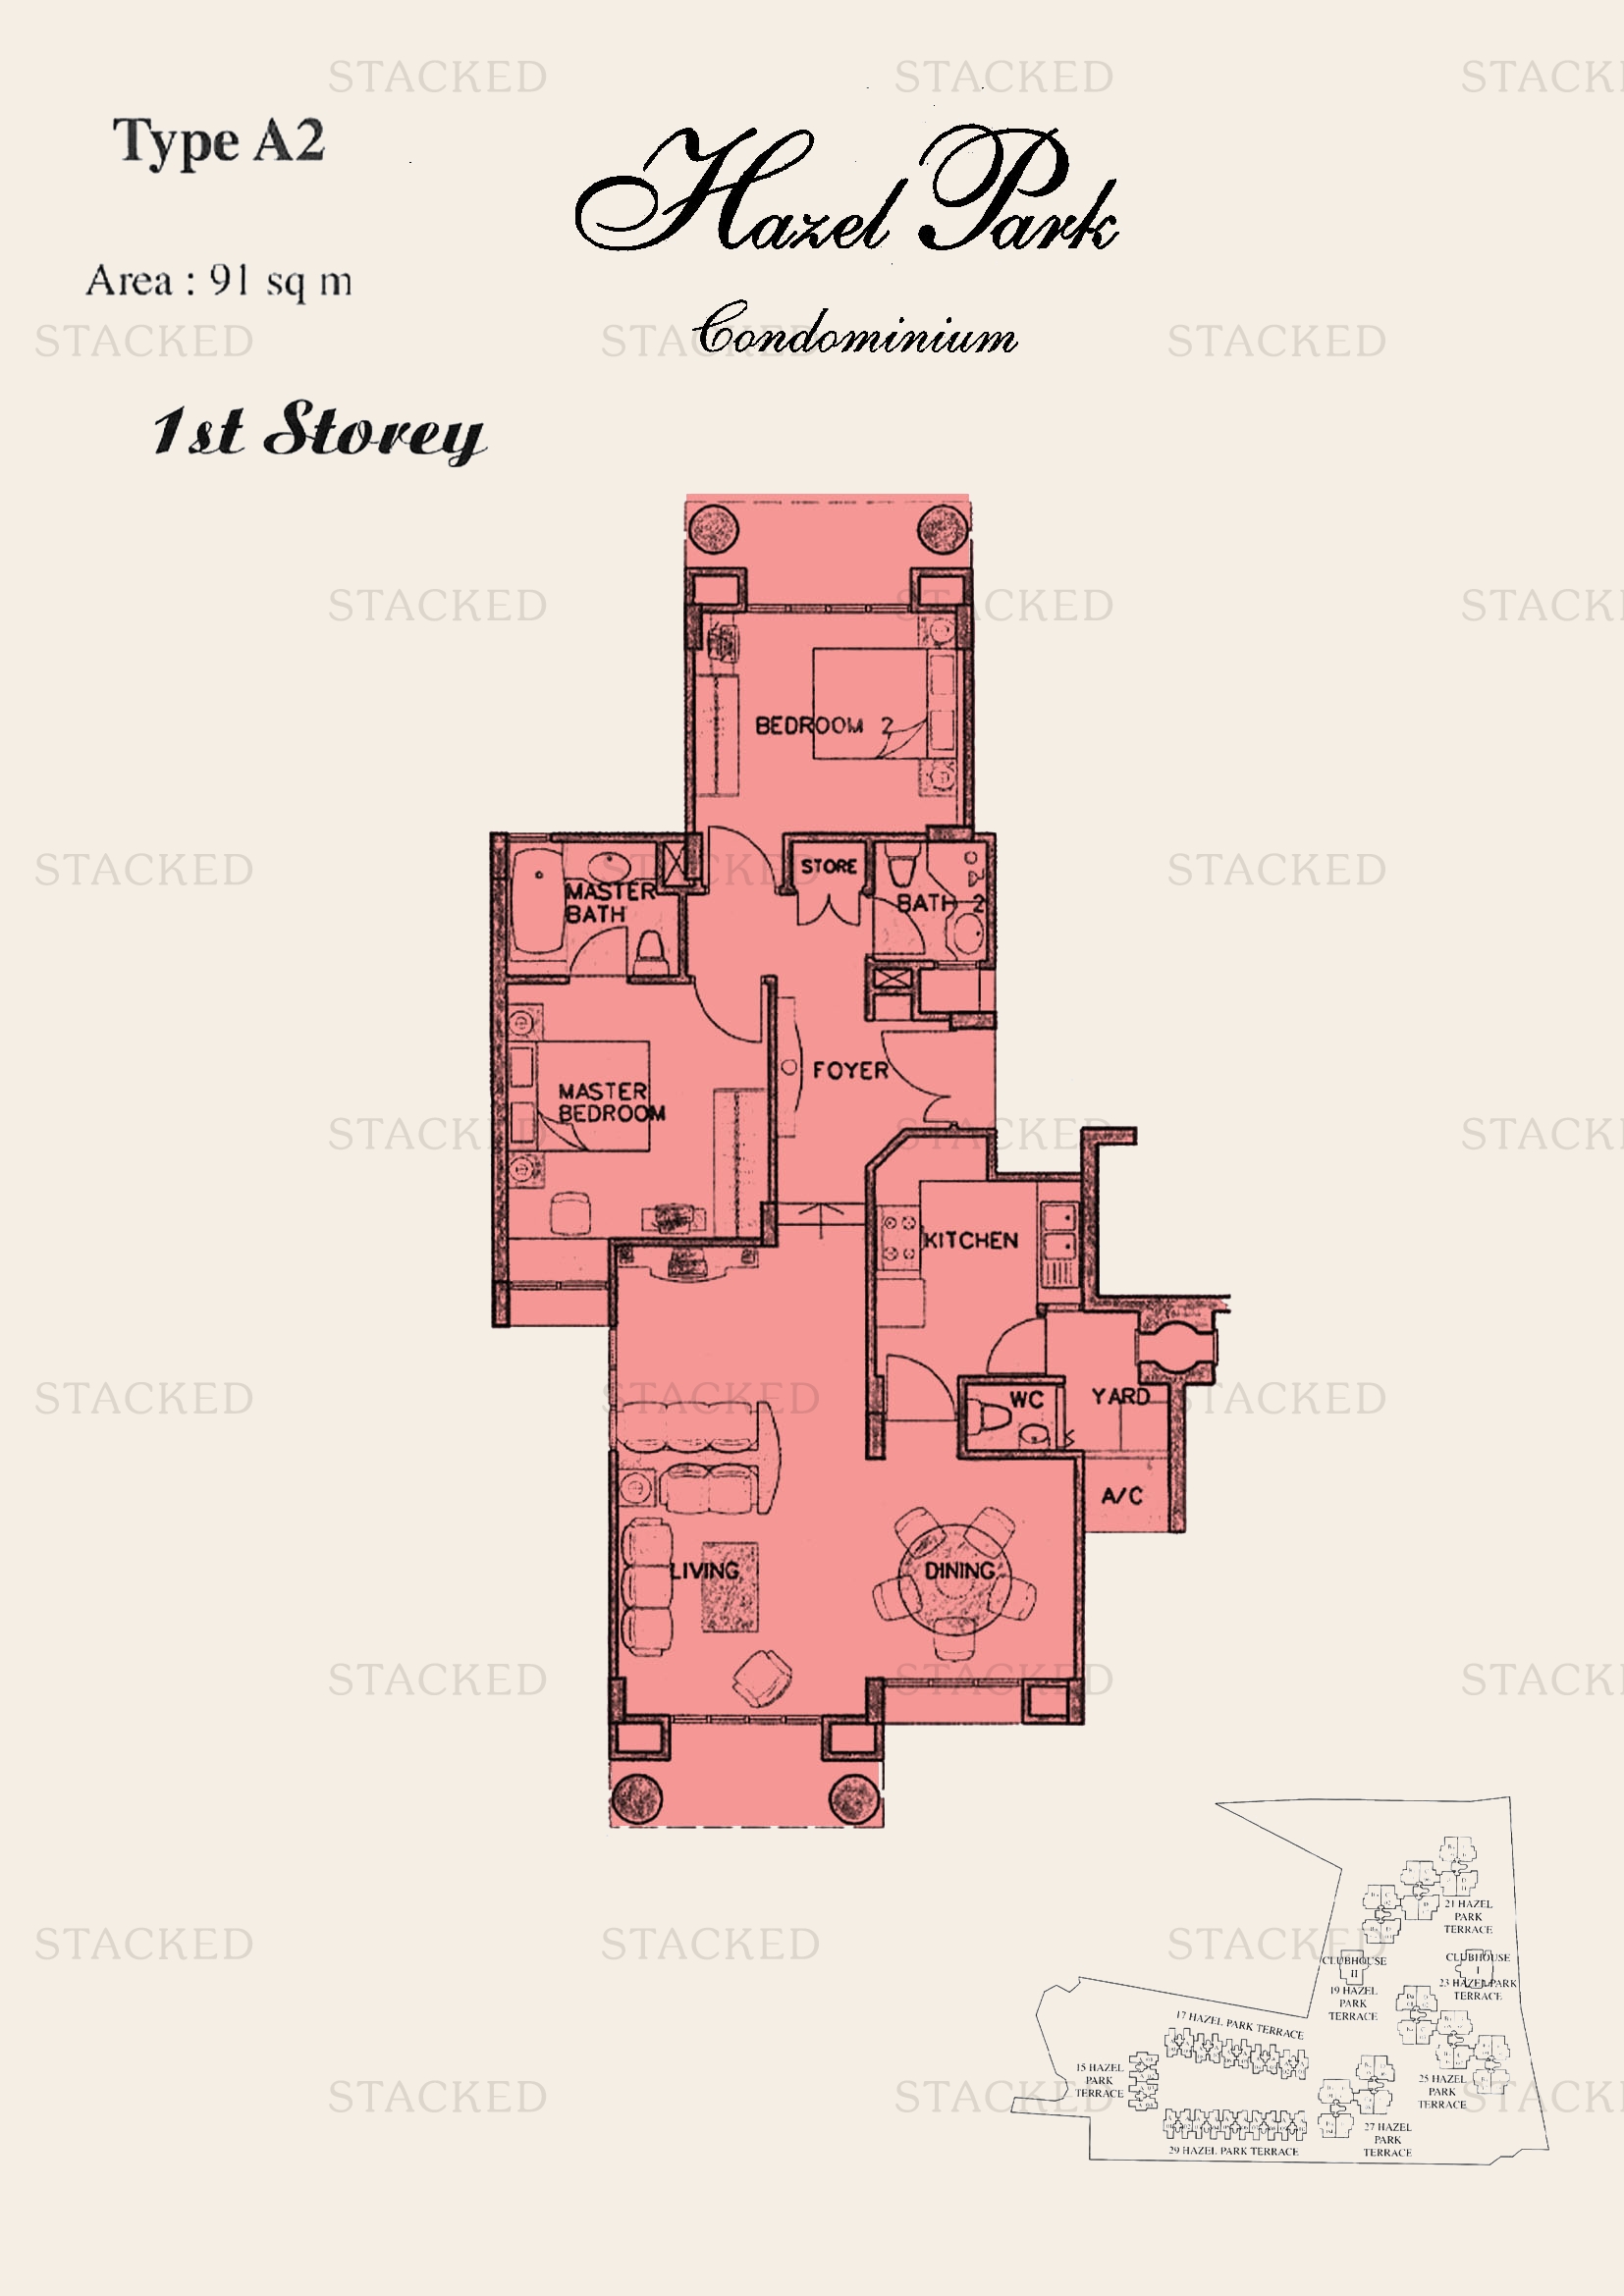 Hazel Park Condominium floor plan